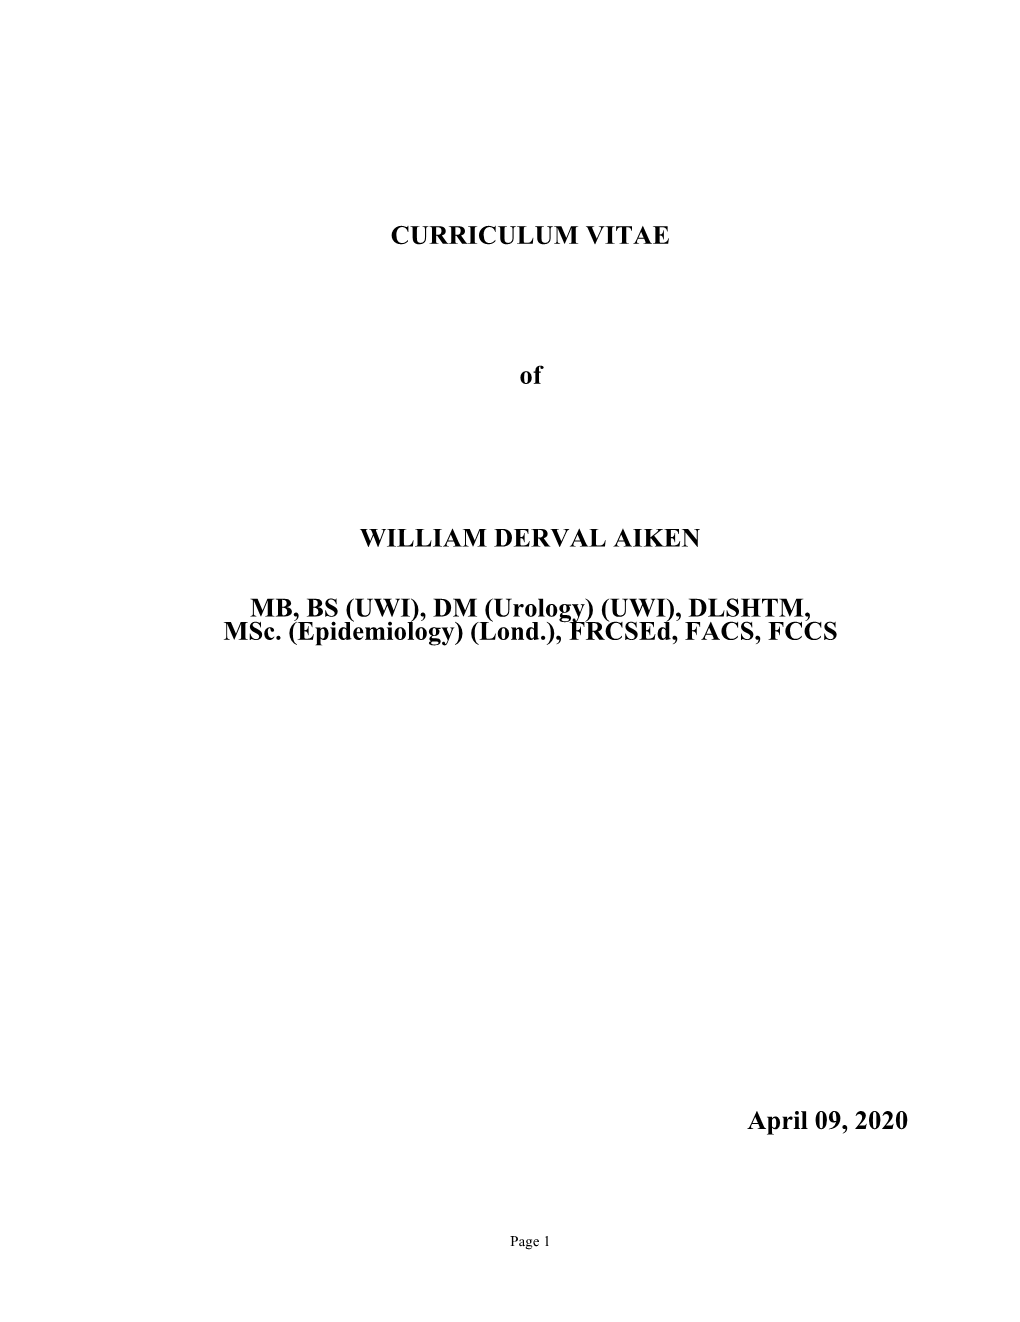 CURRICULUM VITAE of WILLIAM DERVAL AIKEN MB, BS (UWI), DM